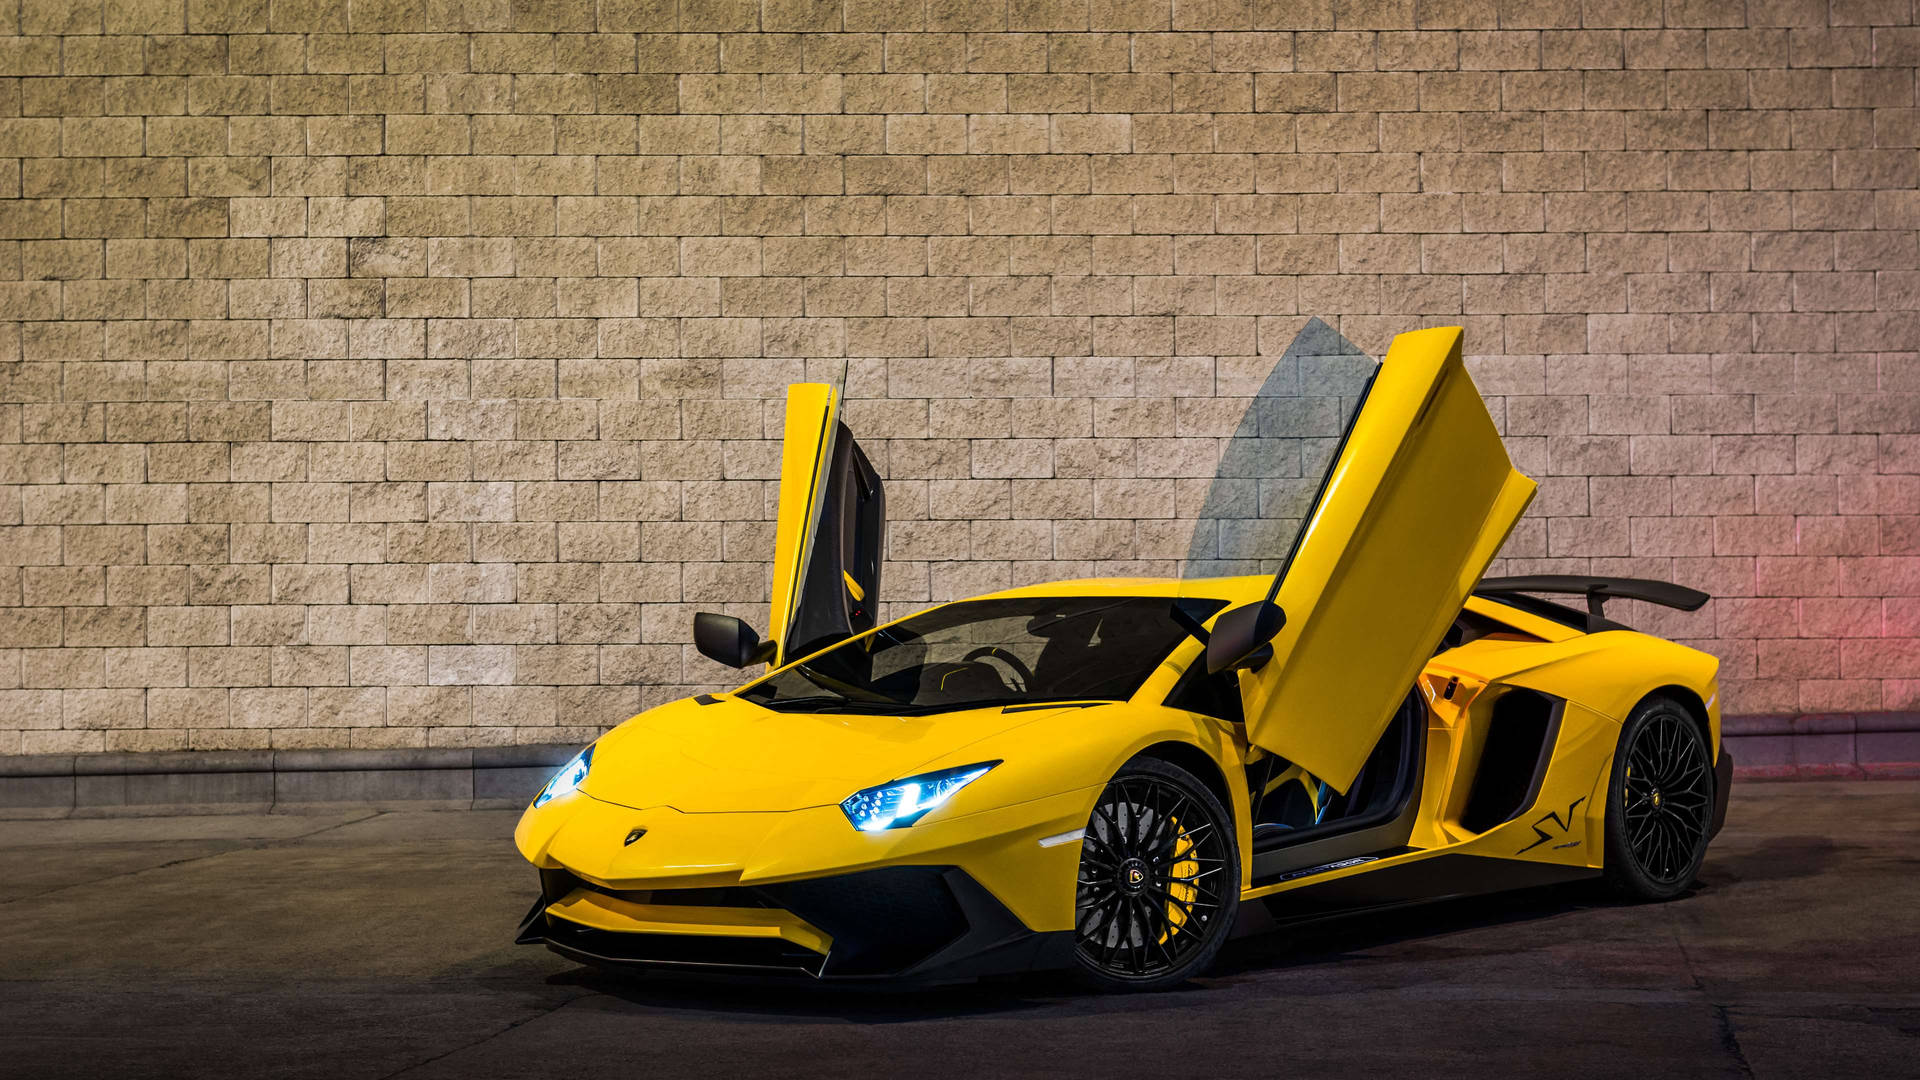 Cool Cars: Canary Yellow Modern Lamborghini Wallpaper